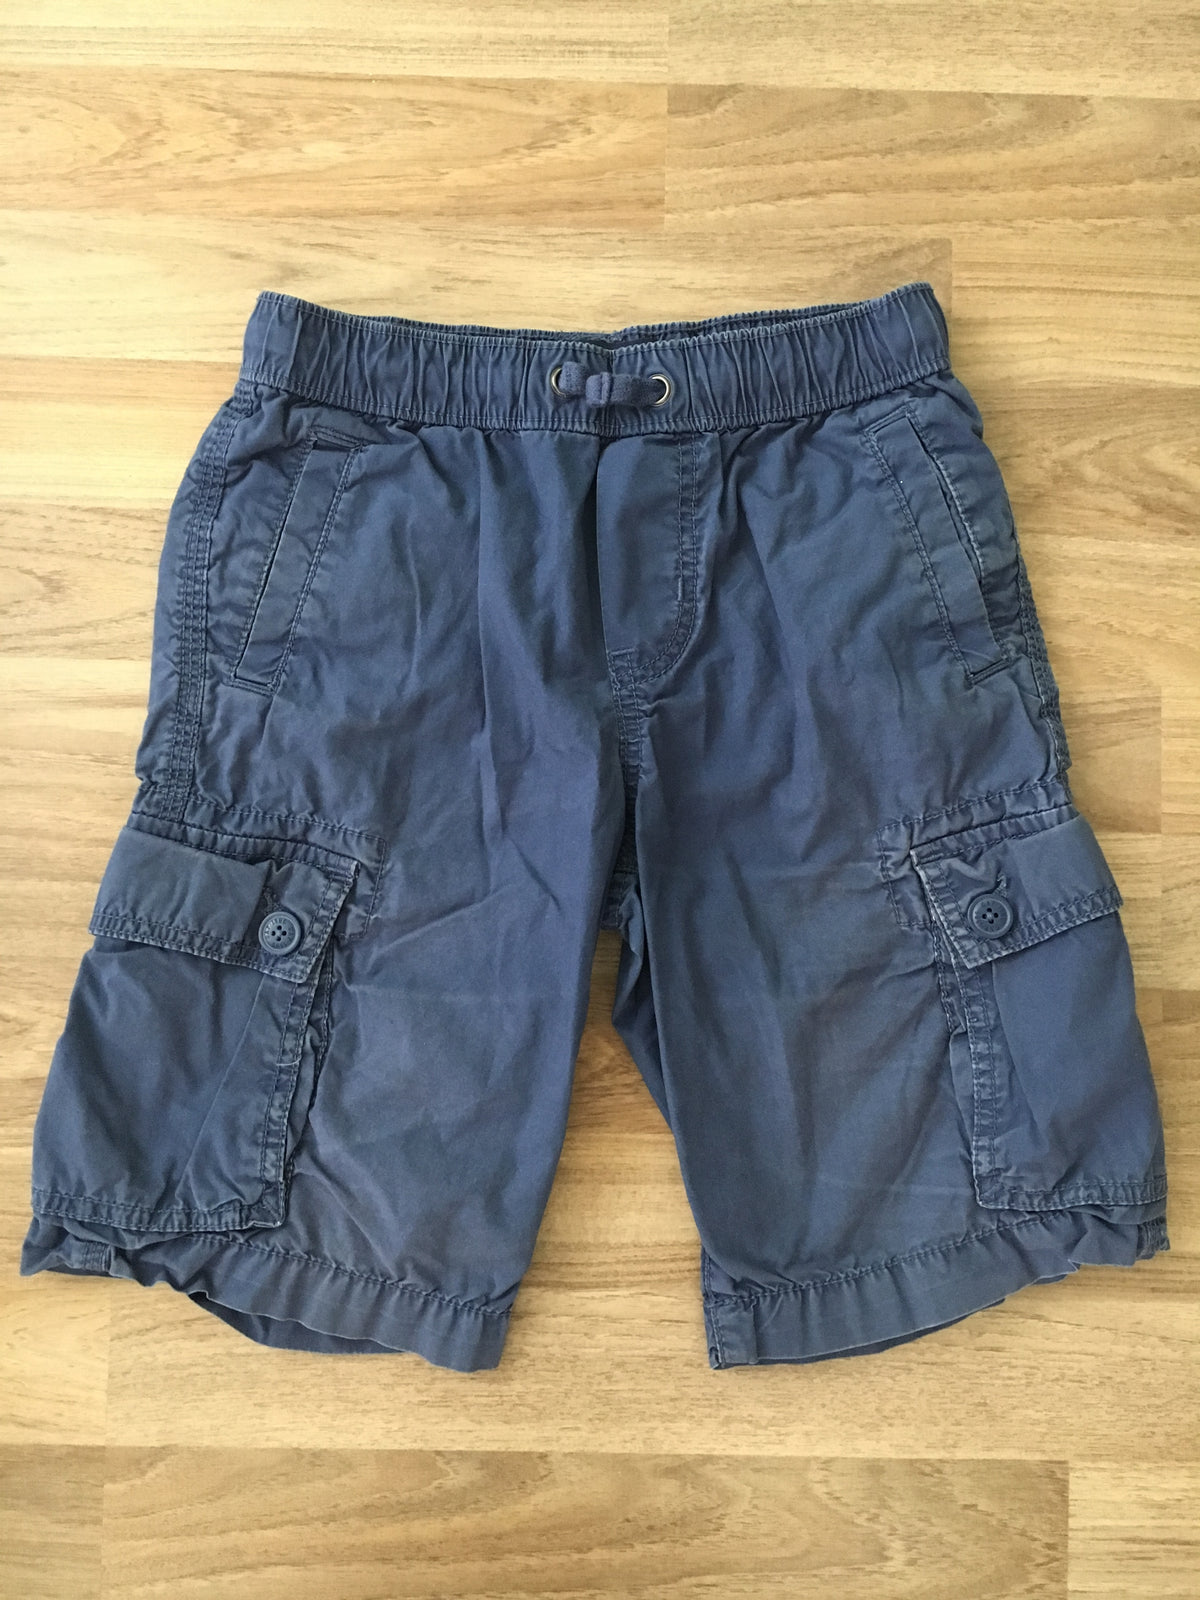 Shorts (Boys Size 8-9T)